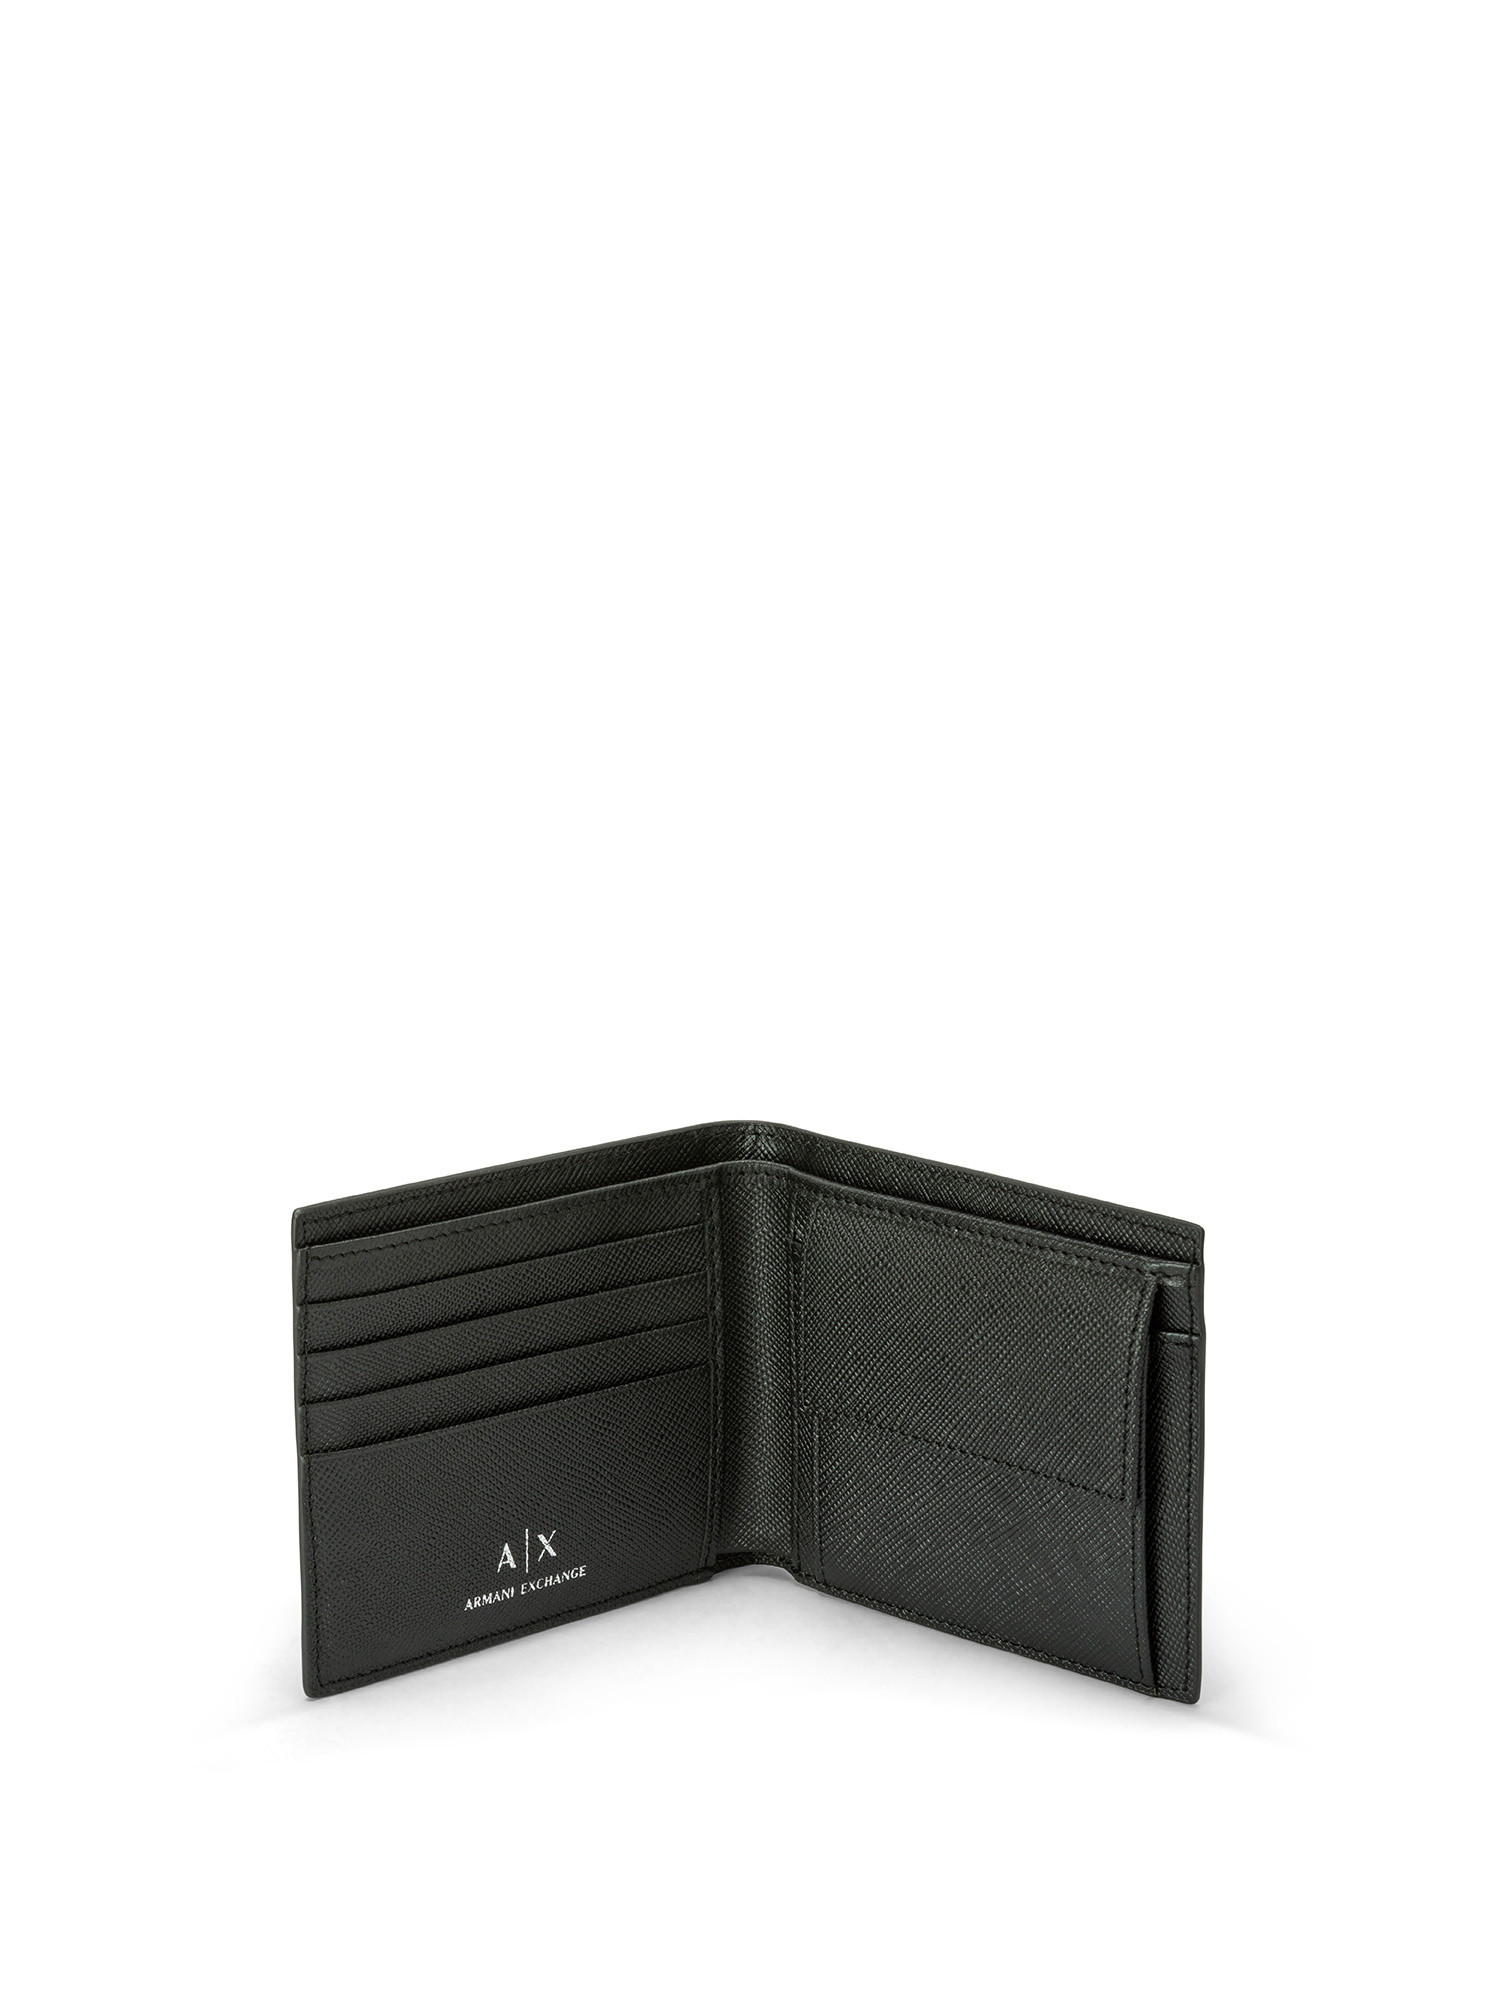 Armani Exchange - Leather wallet, Black, large image number 2